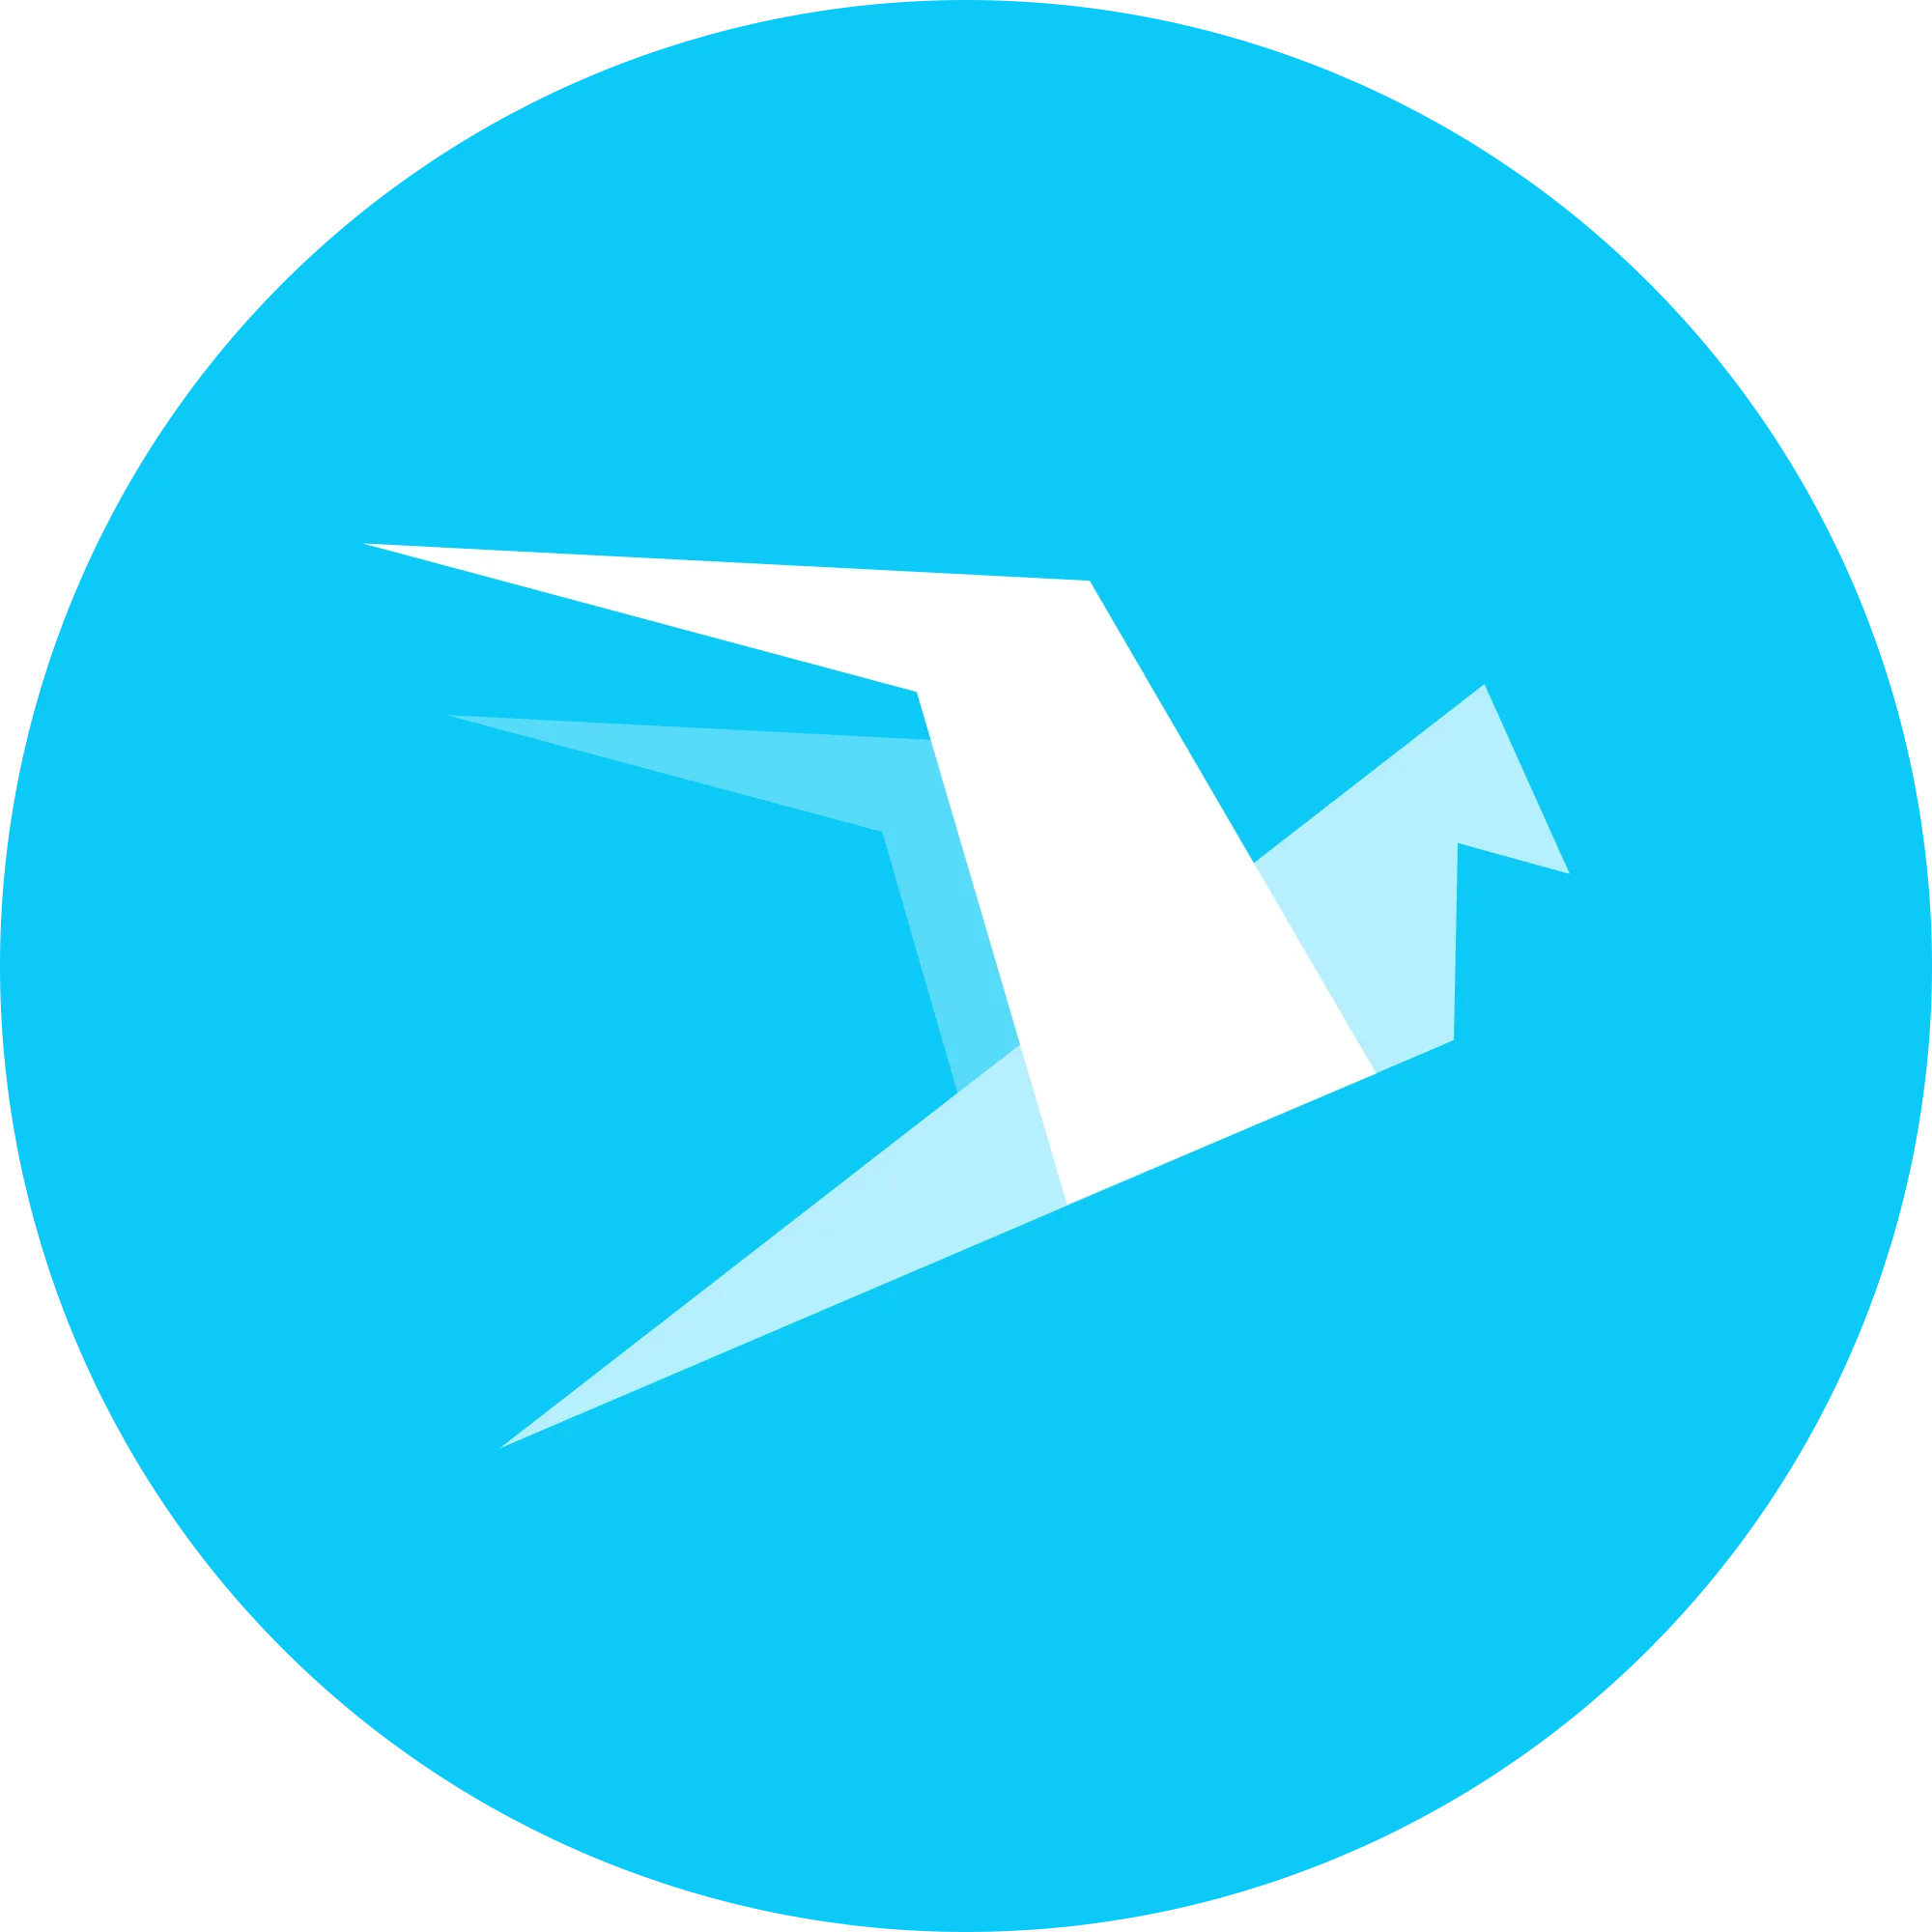 Wings logo in png format